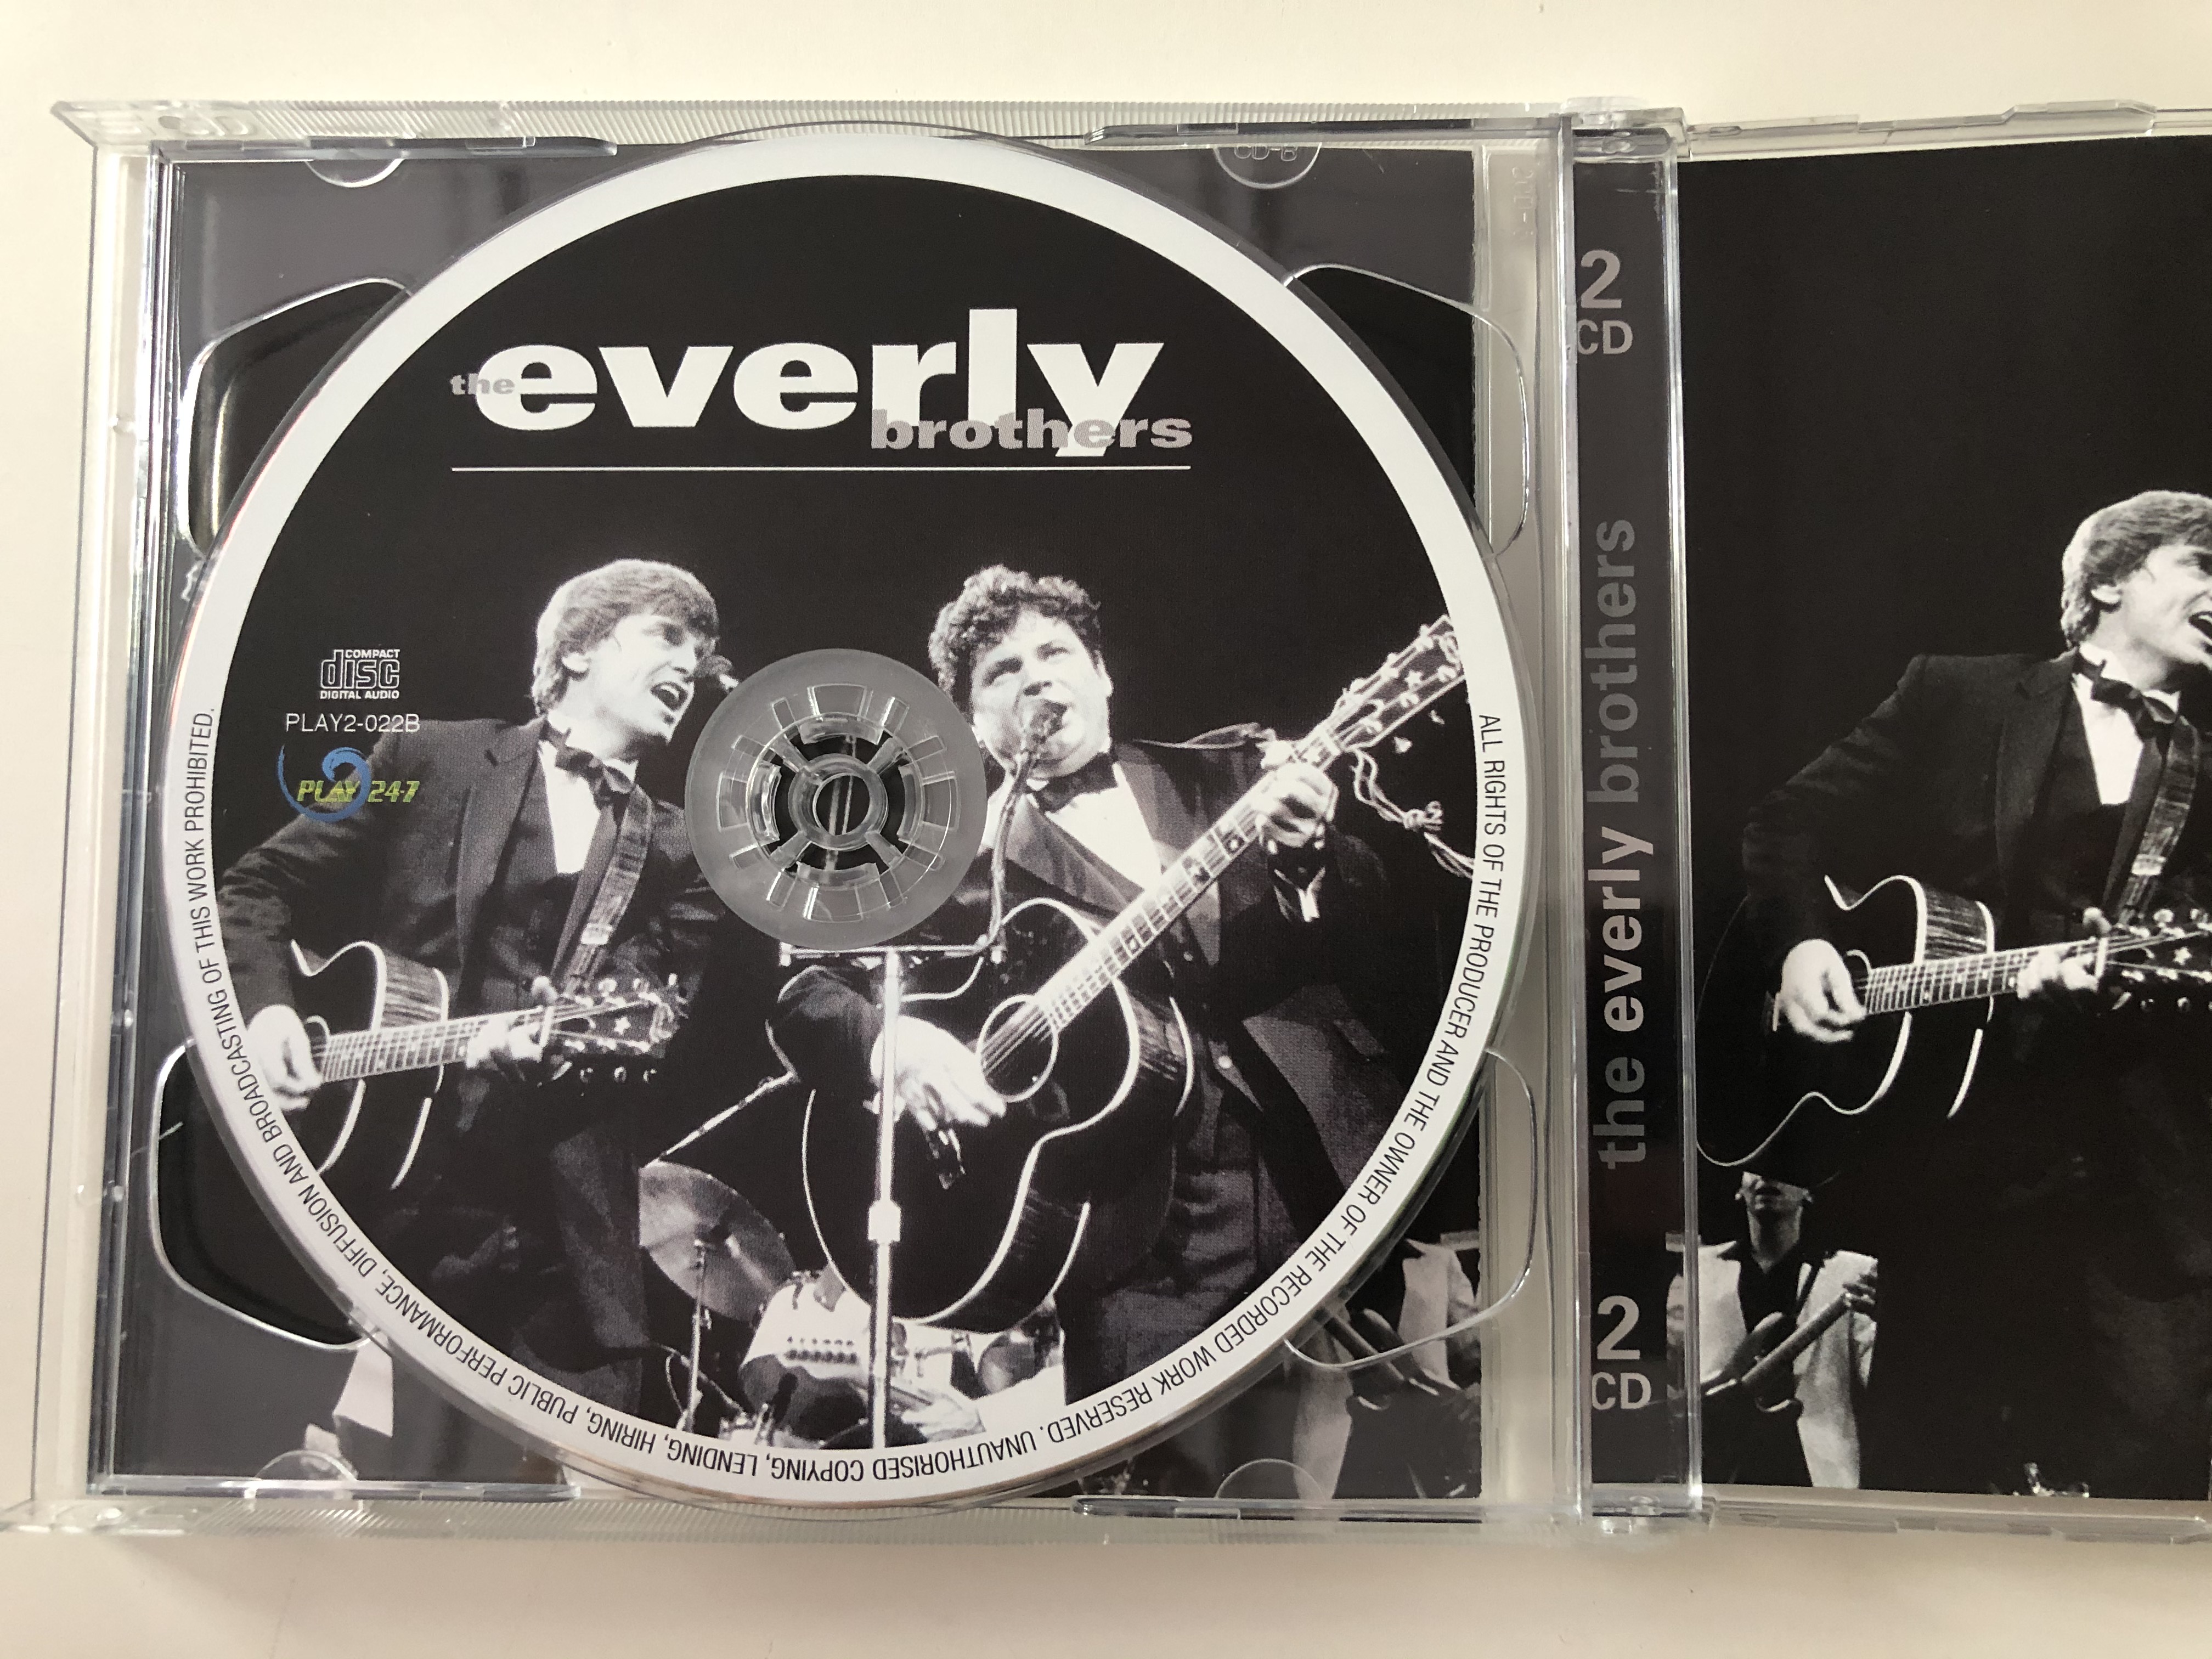 the-everly-brothers-play-24-7-ltd.-2x-audio-cd-2007-play2-022-5-.jpg